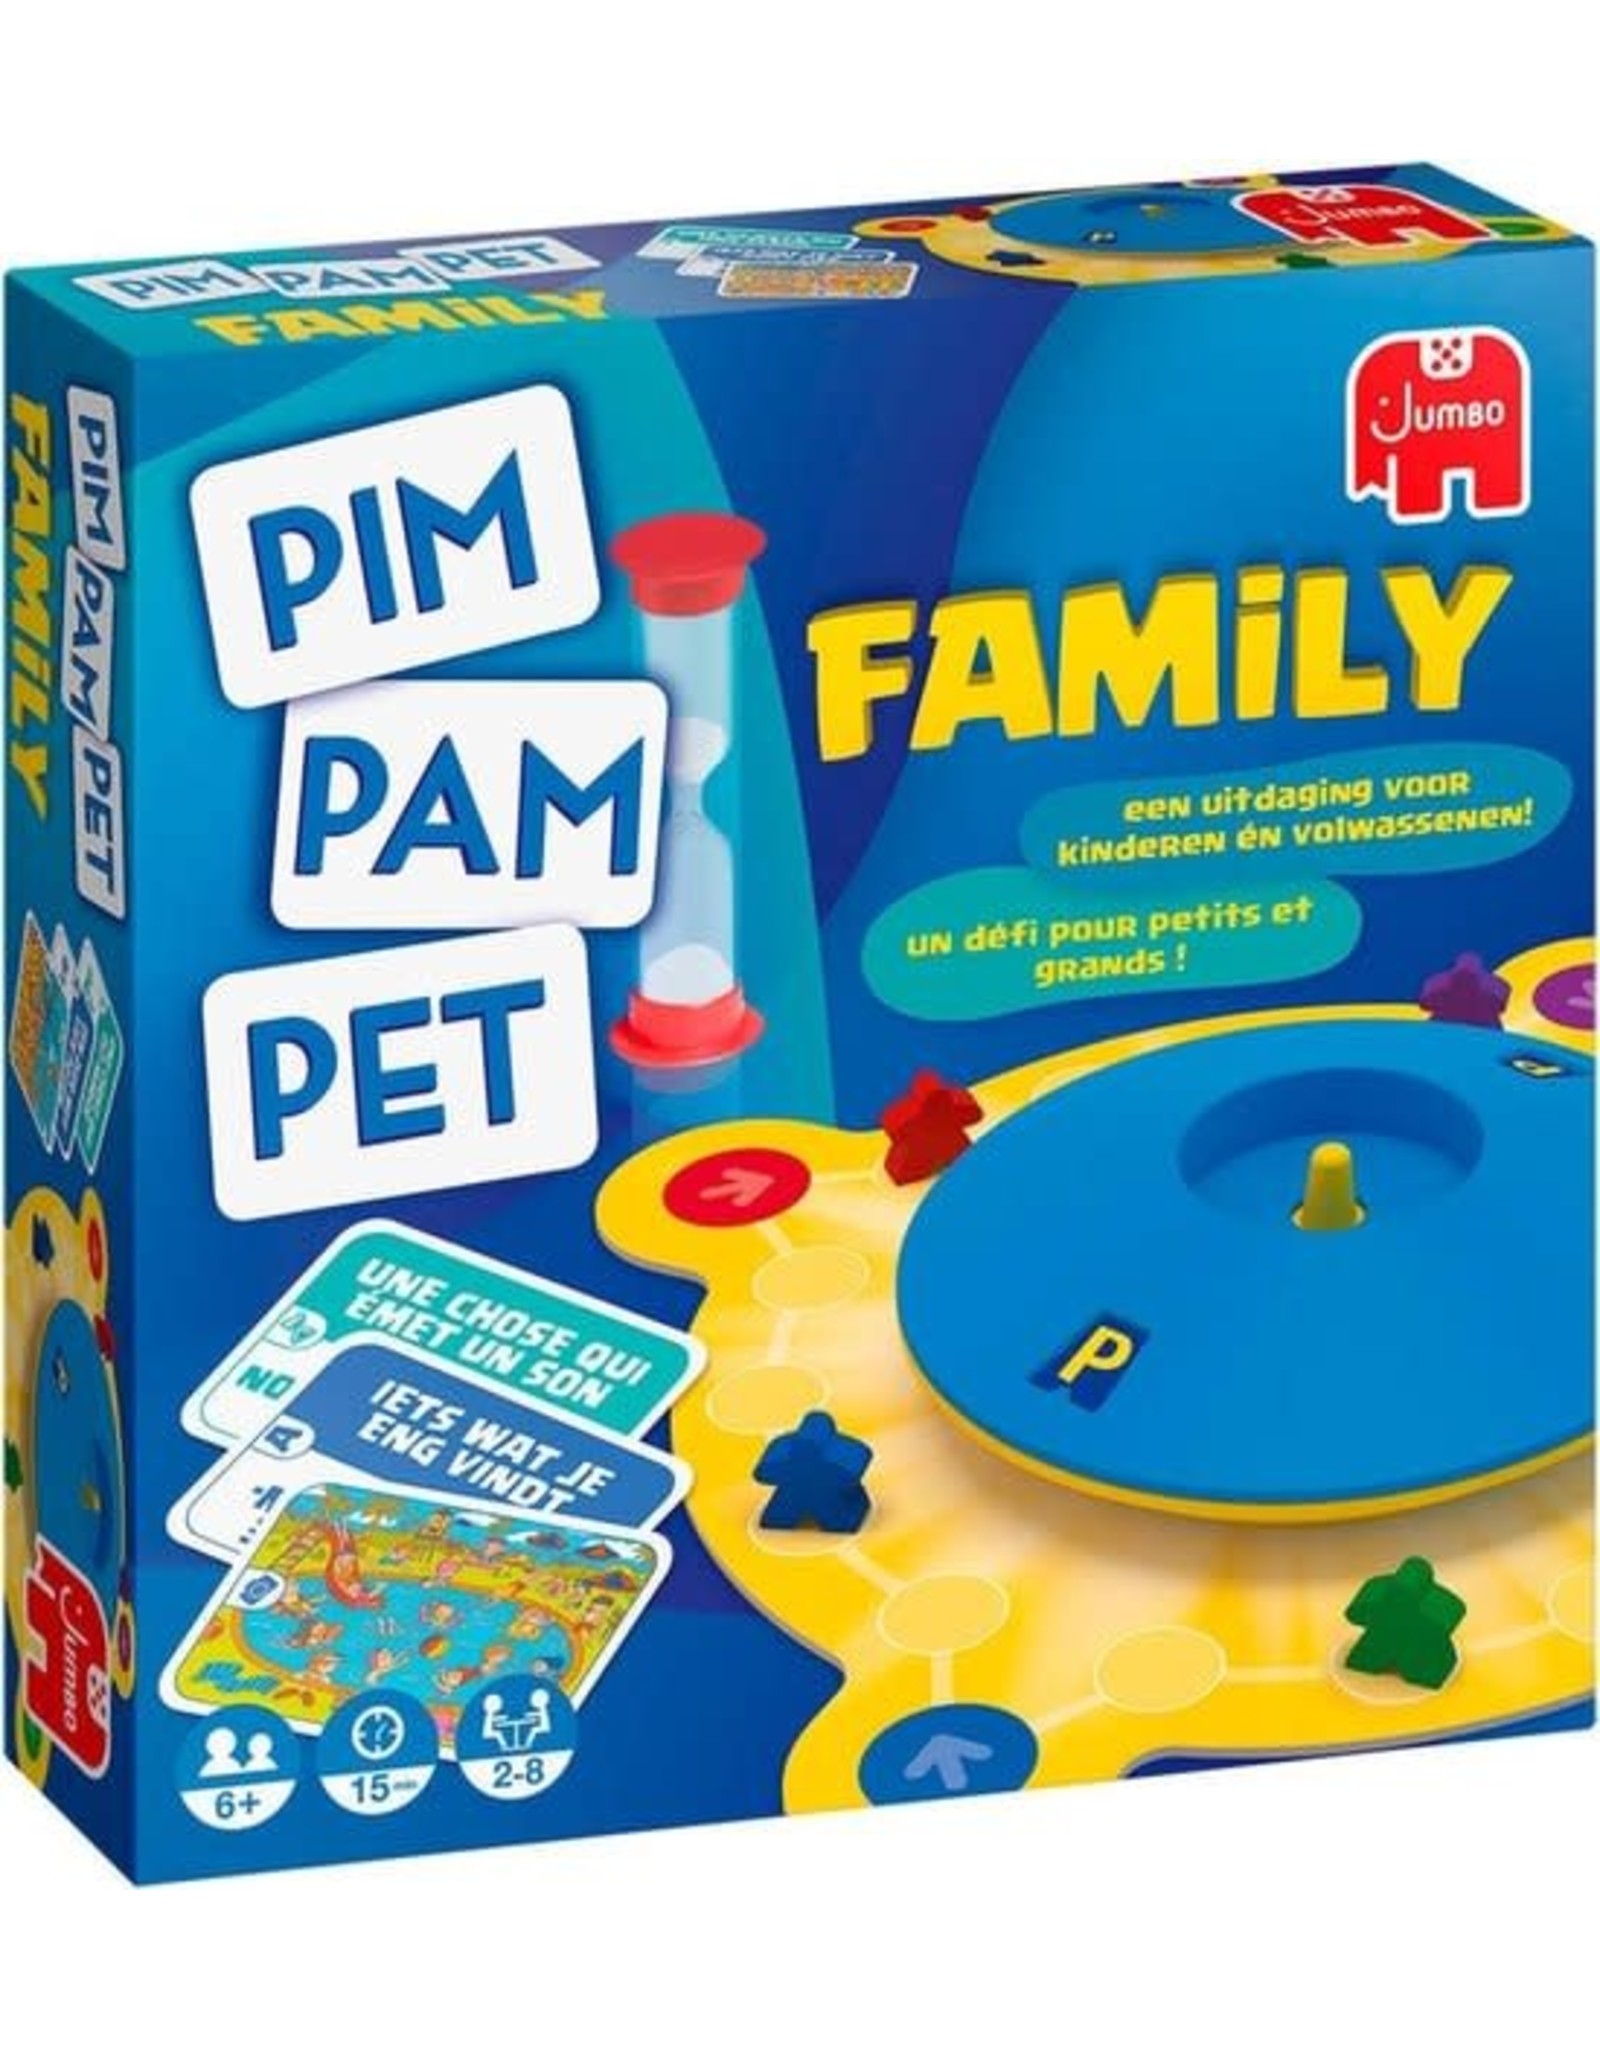 JUMBO Pim Pam Pet Family